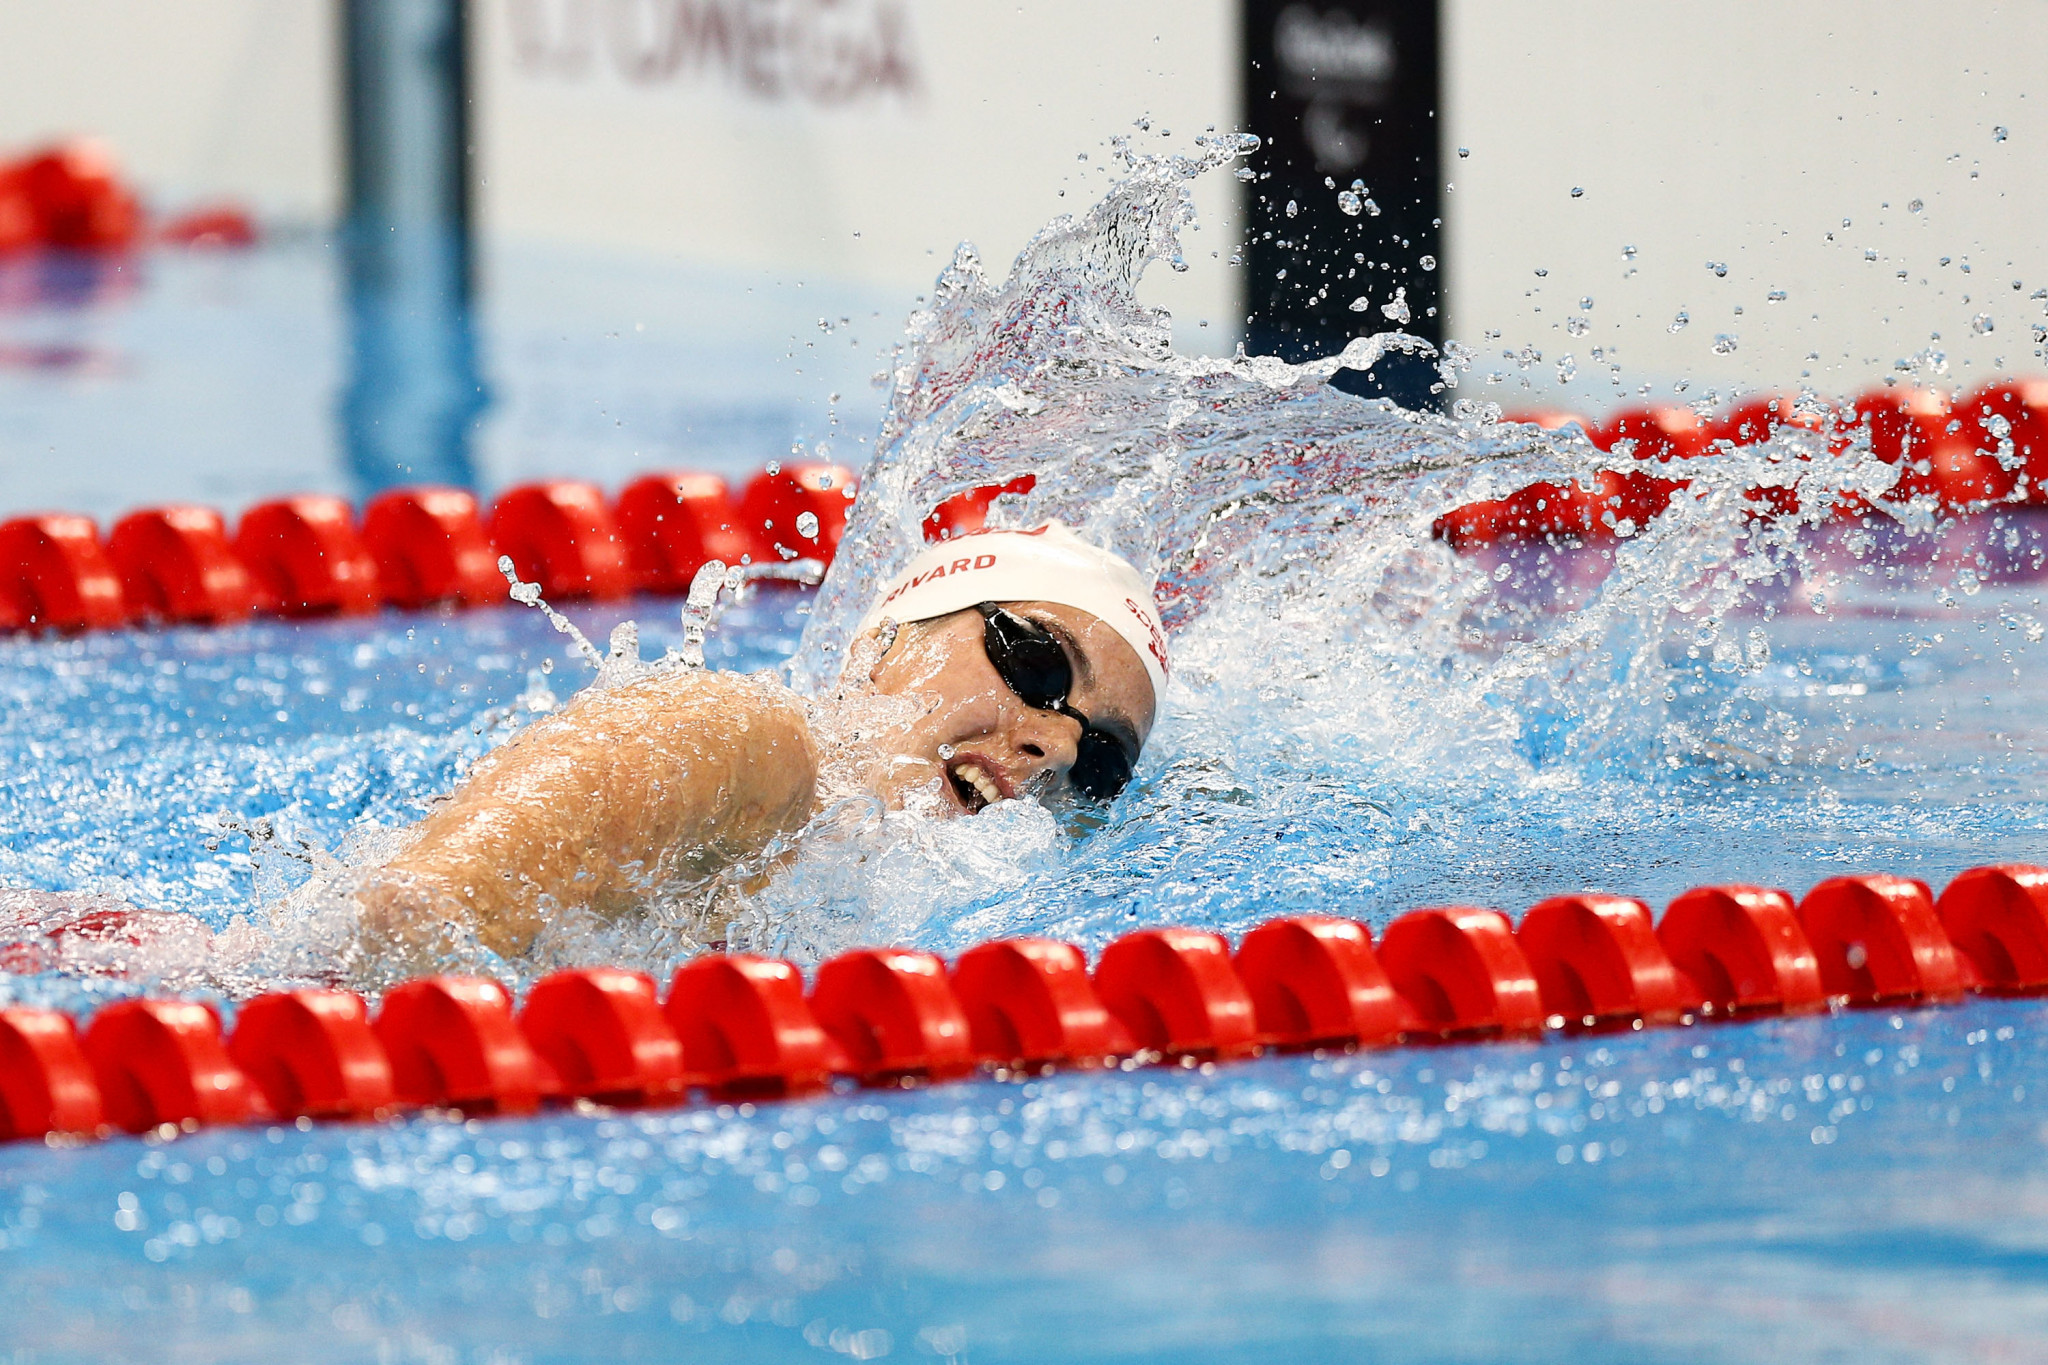 World records fall on opening day at Pan Pacific Para Swimming Championships